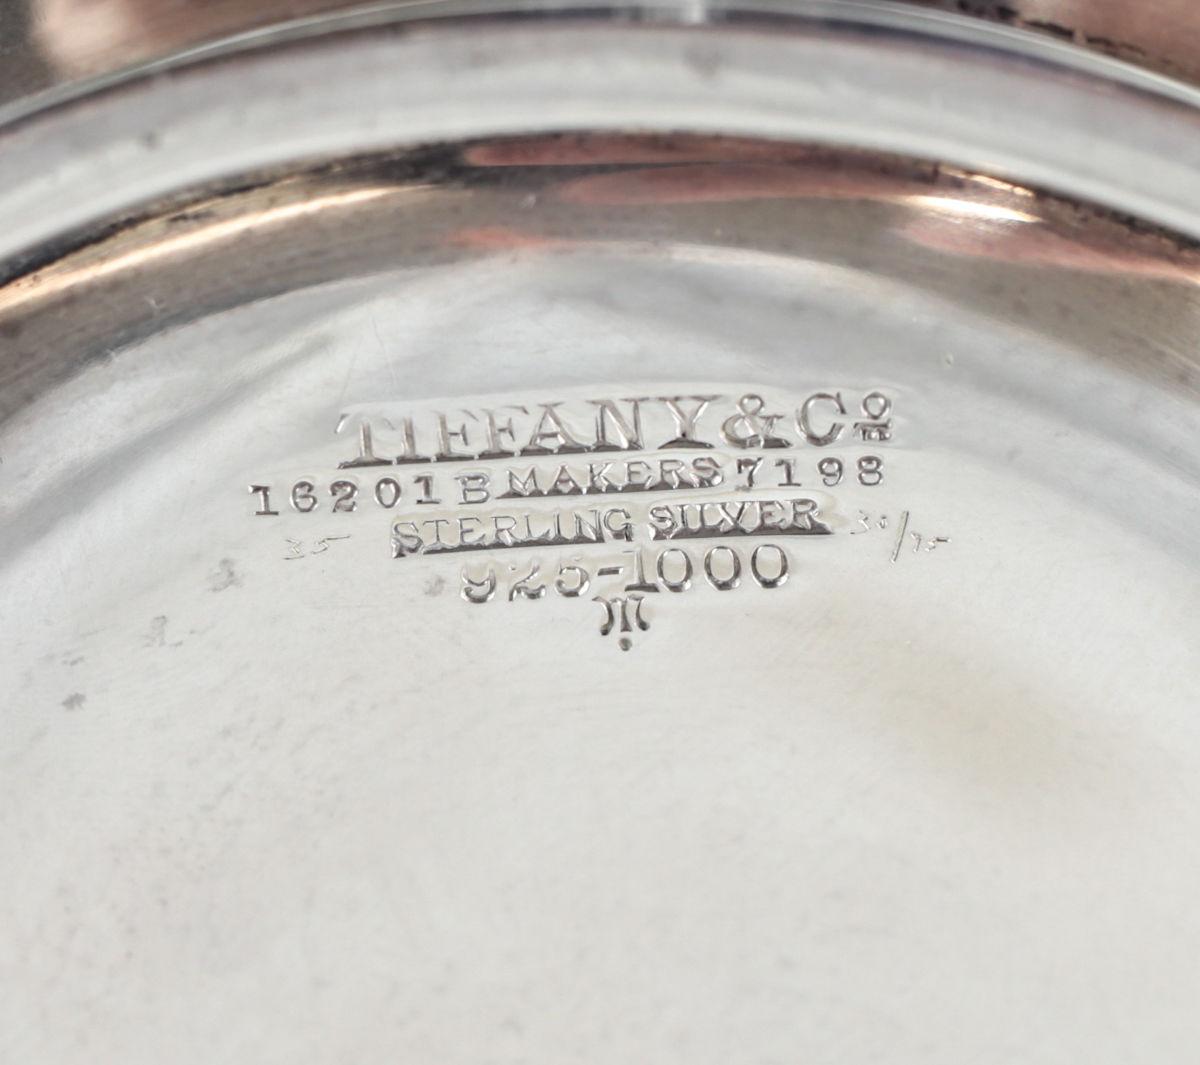 Tiffany & Co. Makers Sterling Silver Flower Basket #16201, John C. Moore (Sterlingsilber)